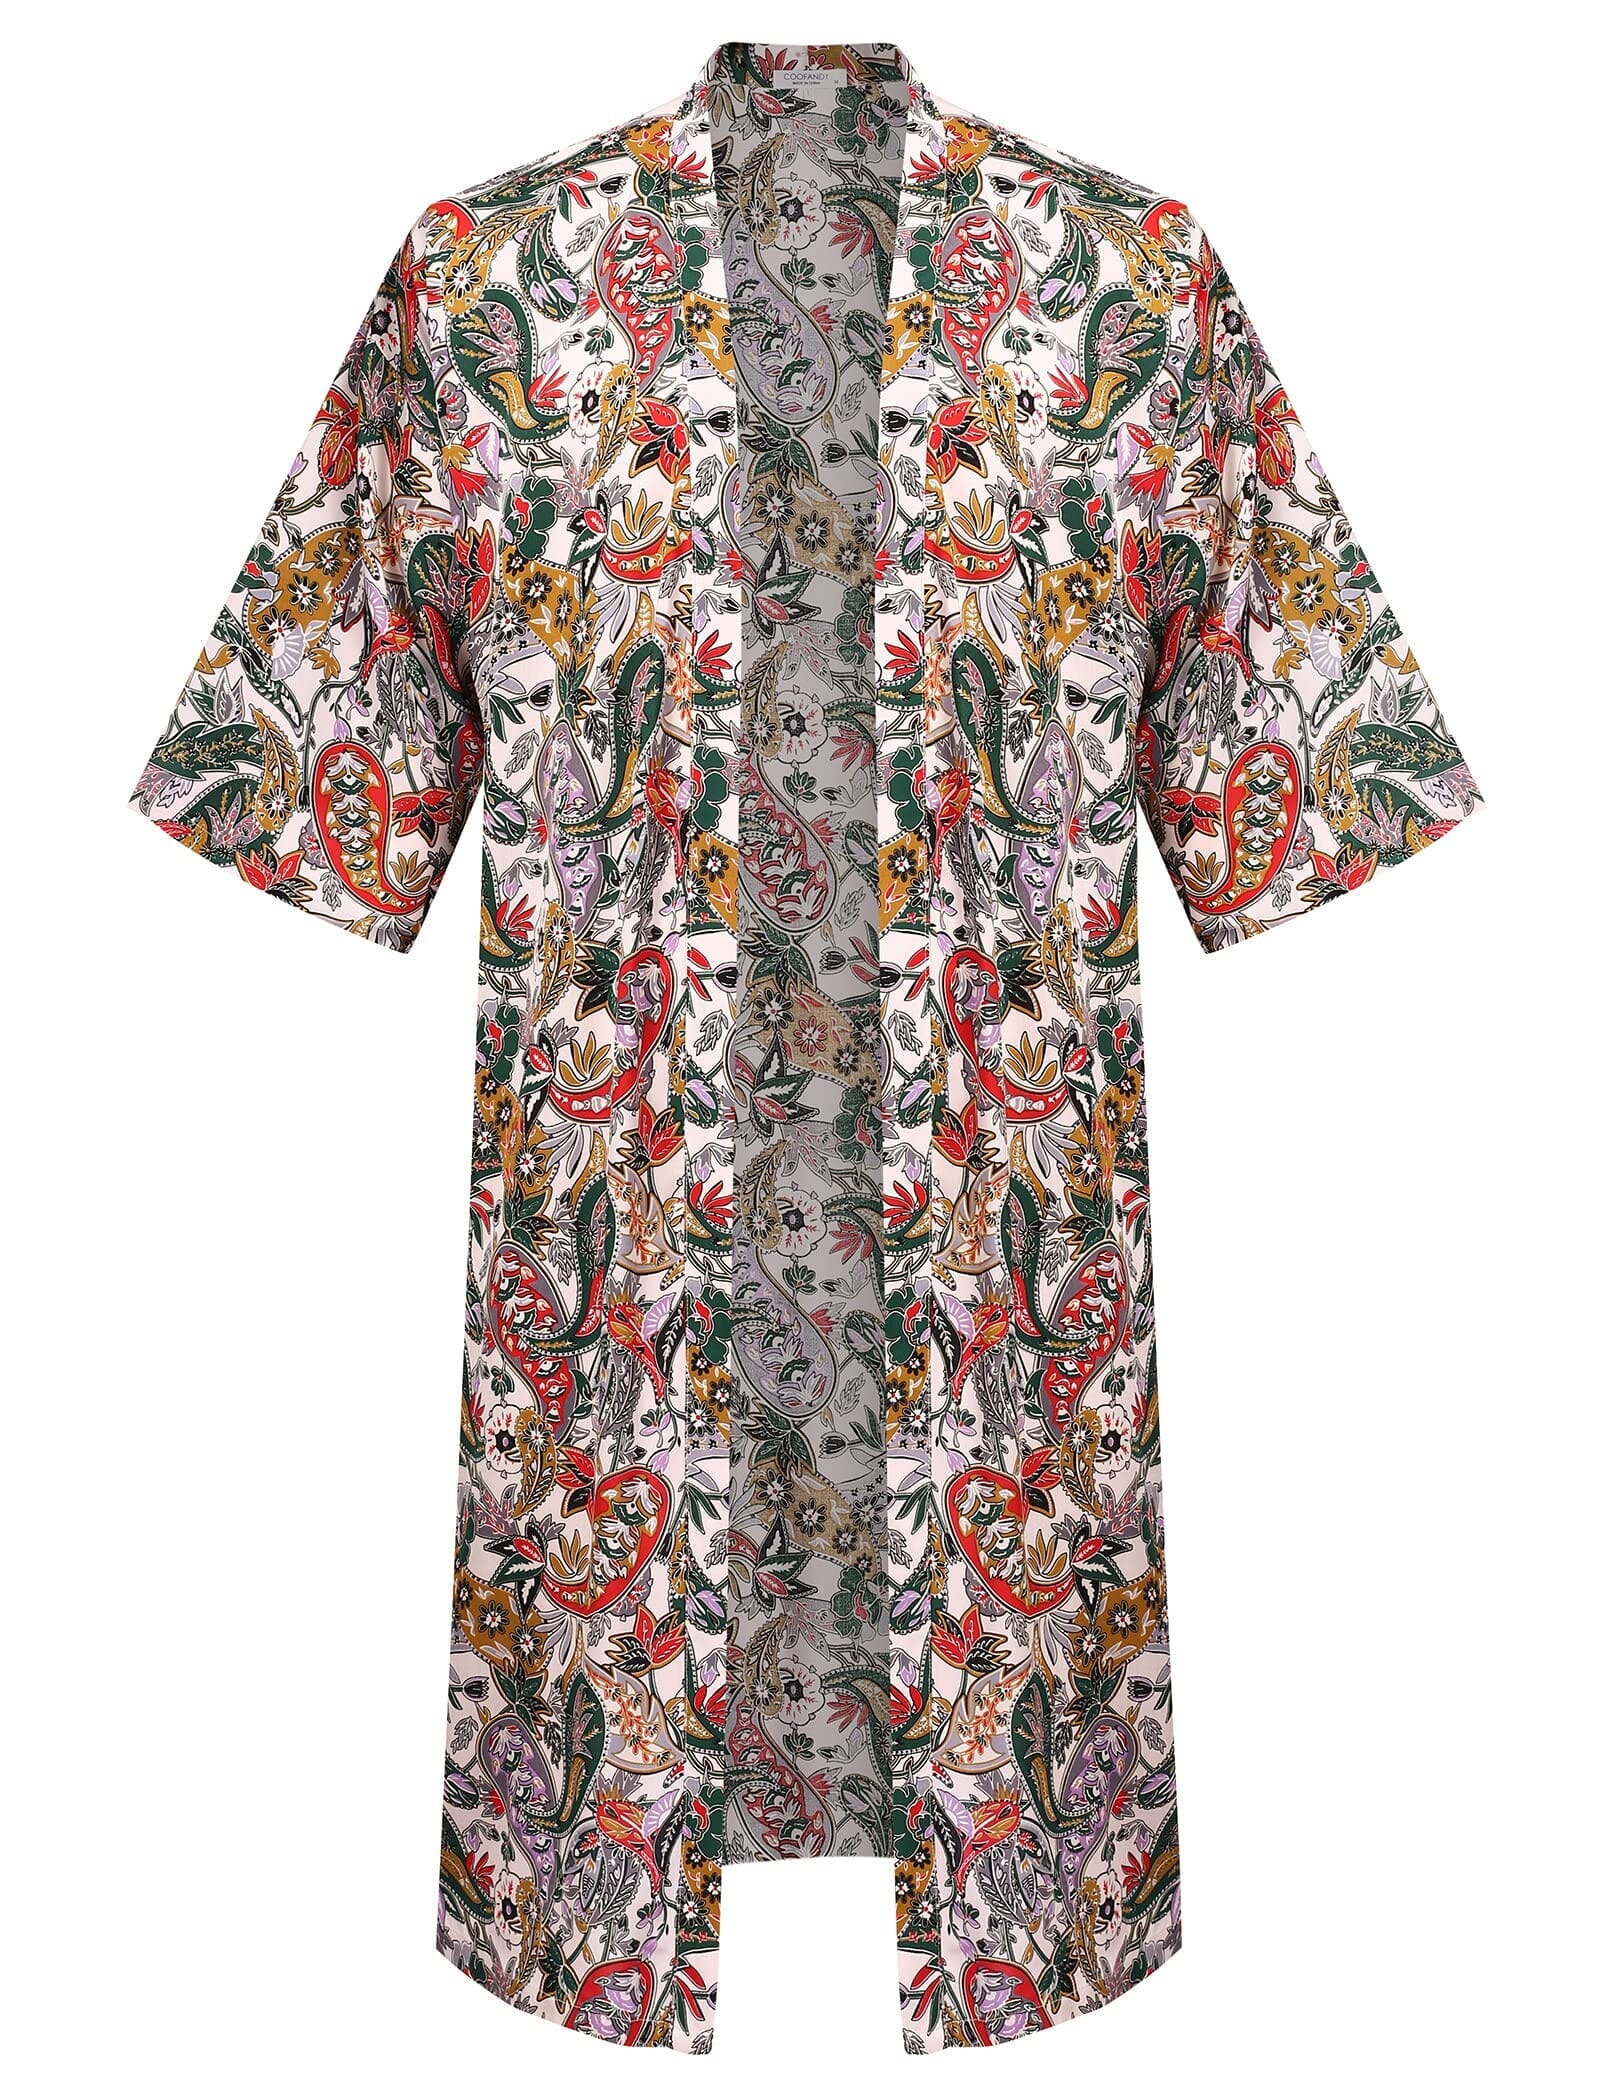 Coofandy Lightweight Kimono Robe (US Only) Robe coofandy White(paisley Print) S 